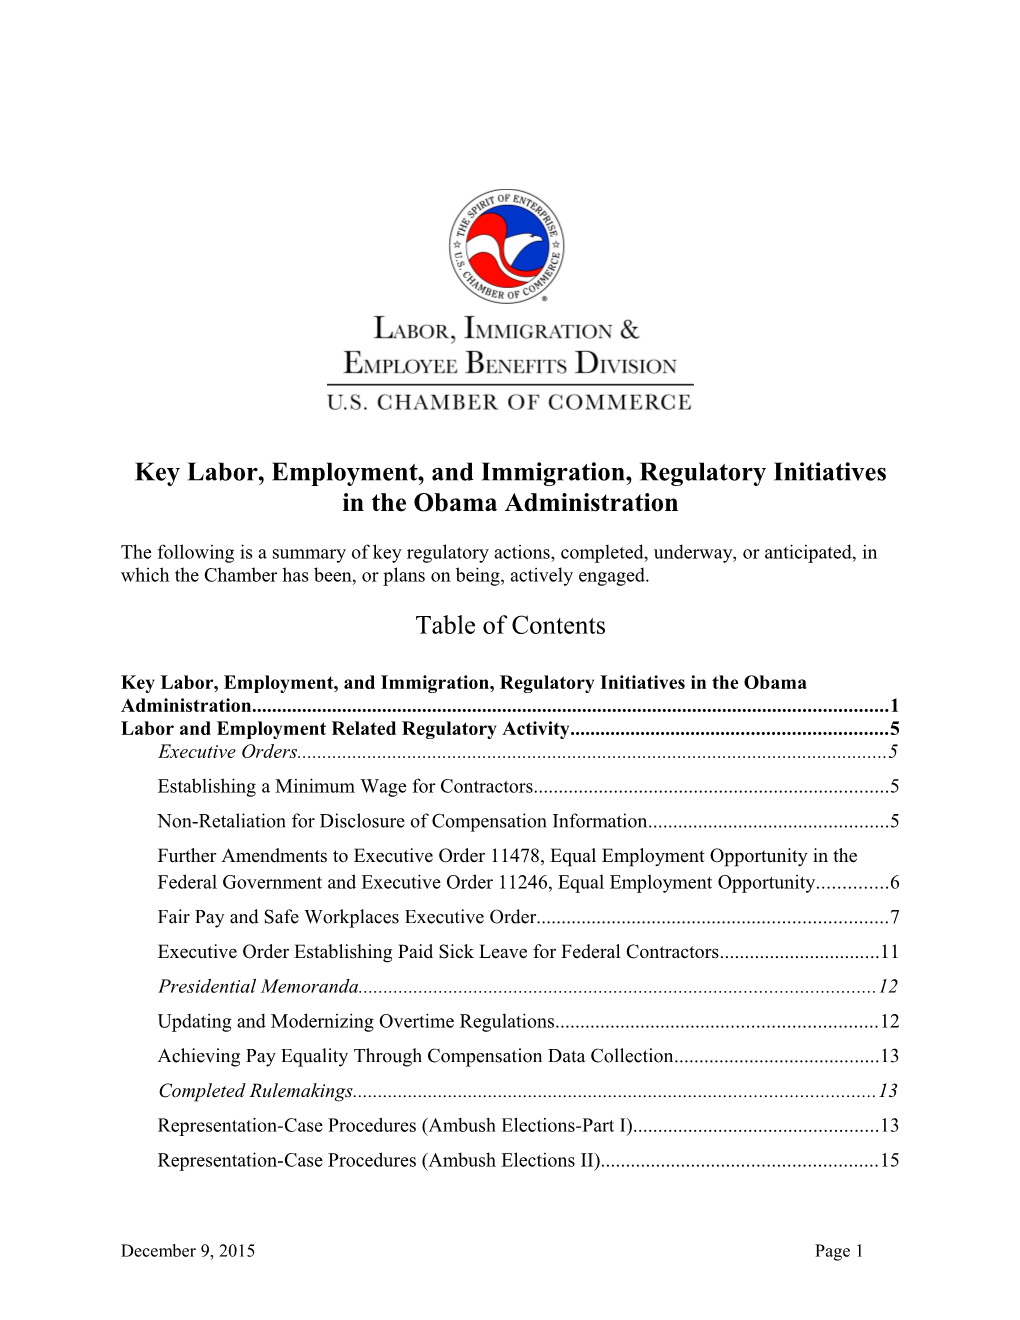 Obama Administration Labor and Employment Regulatory Initiatives